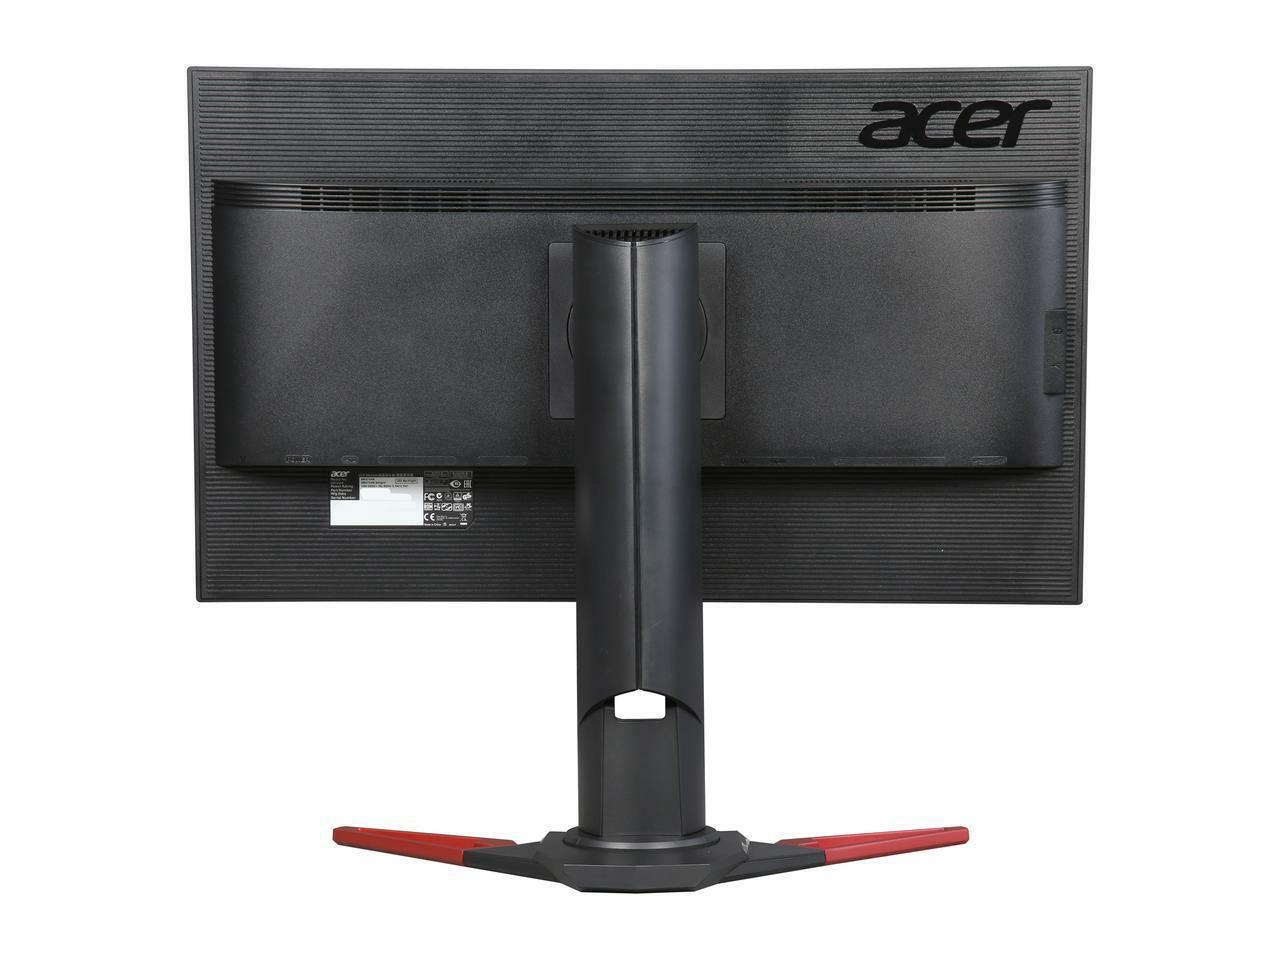 Monitor Acer Predator XB271HK / 27.0" IPS LED 4K 3840 x 2160 / ZeroFrame / 4ms / 100M:1 / 350cd / USB Hub / Speakers / XB271HKBMIPRZ / UM.HX1EE.001 /